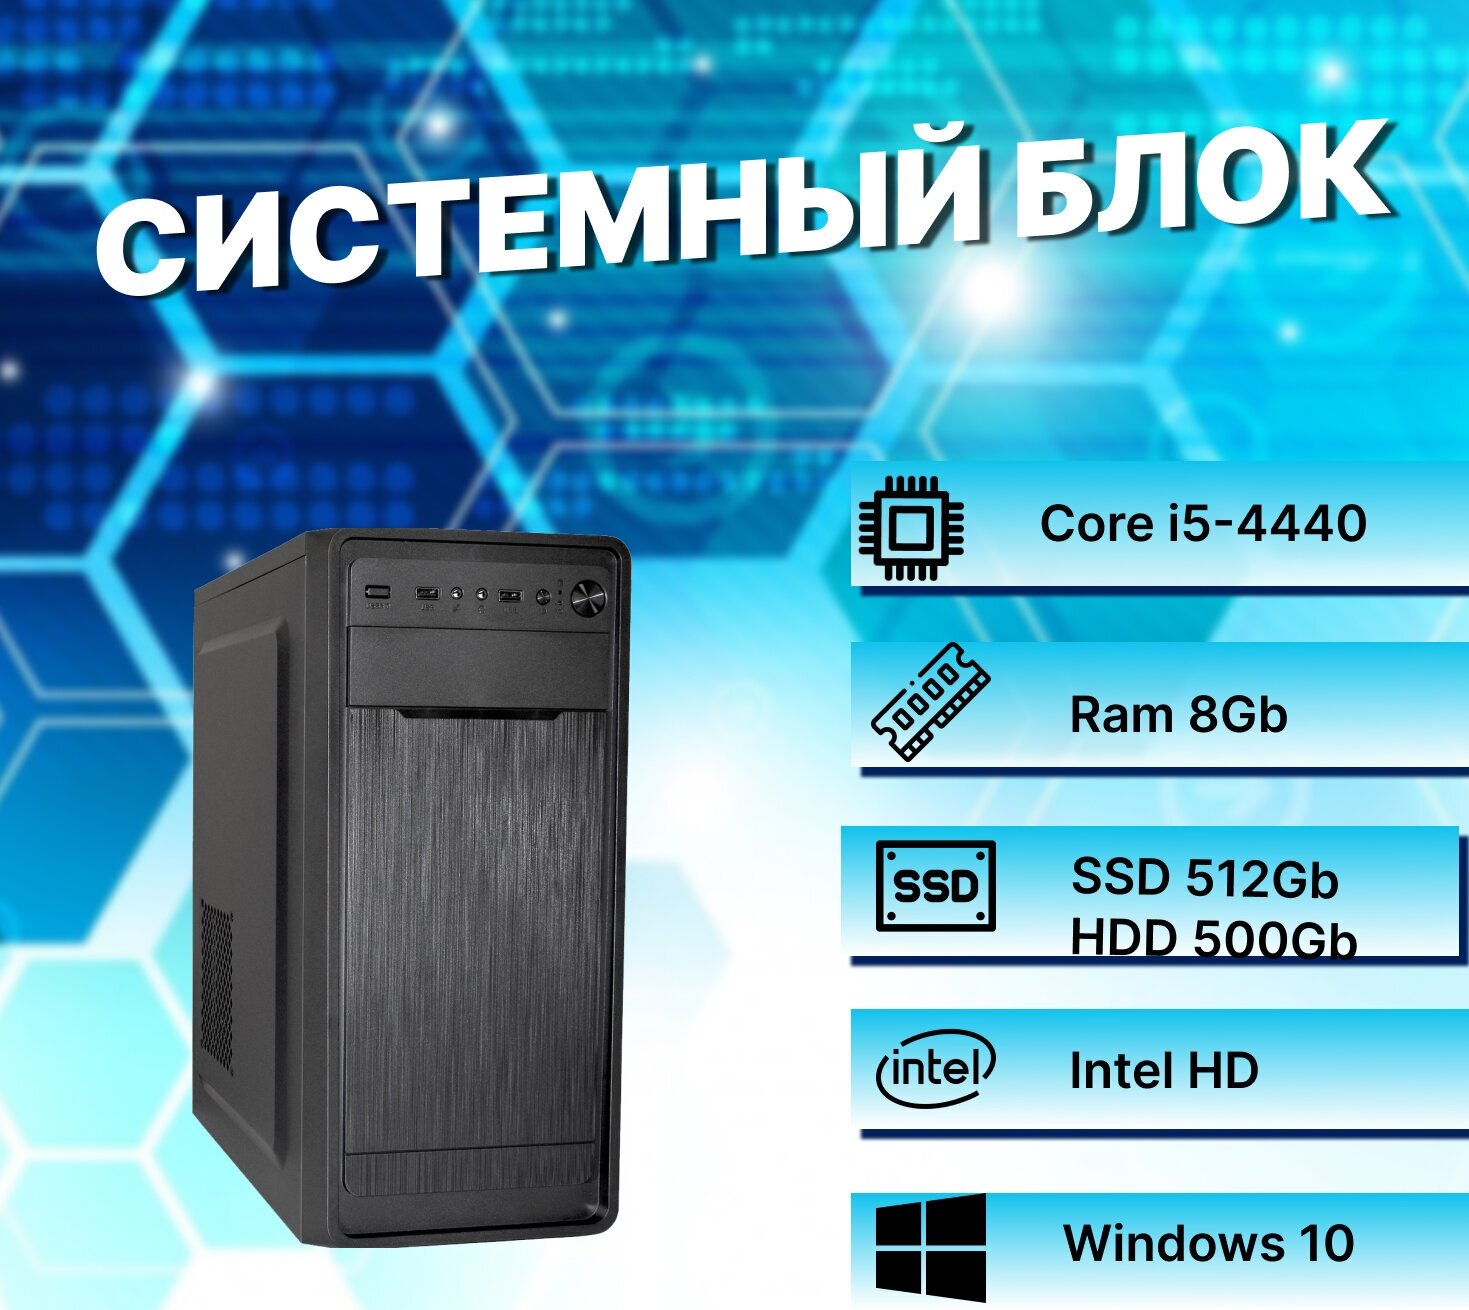 Системный блок Intel Core i5-4440 (3.1ГГц)/ RAM 8Gb/ SSD 512Gb/HDD 500Gb/ Intel HD/ Windows 10 Pro